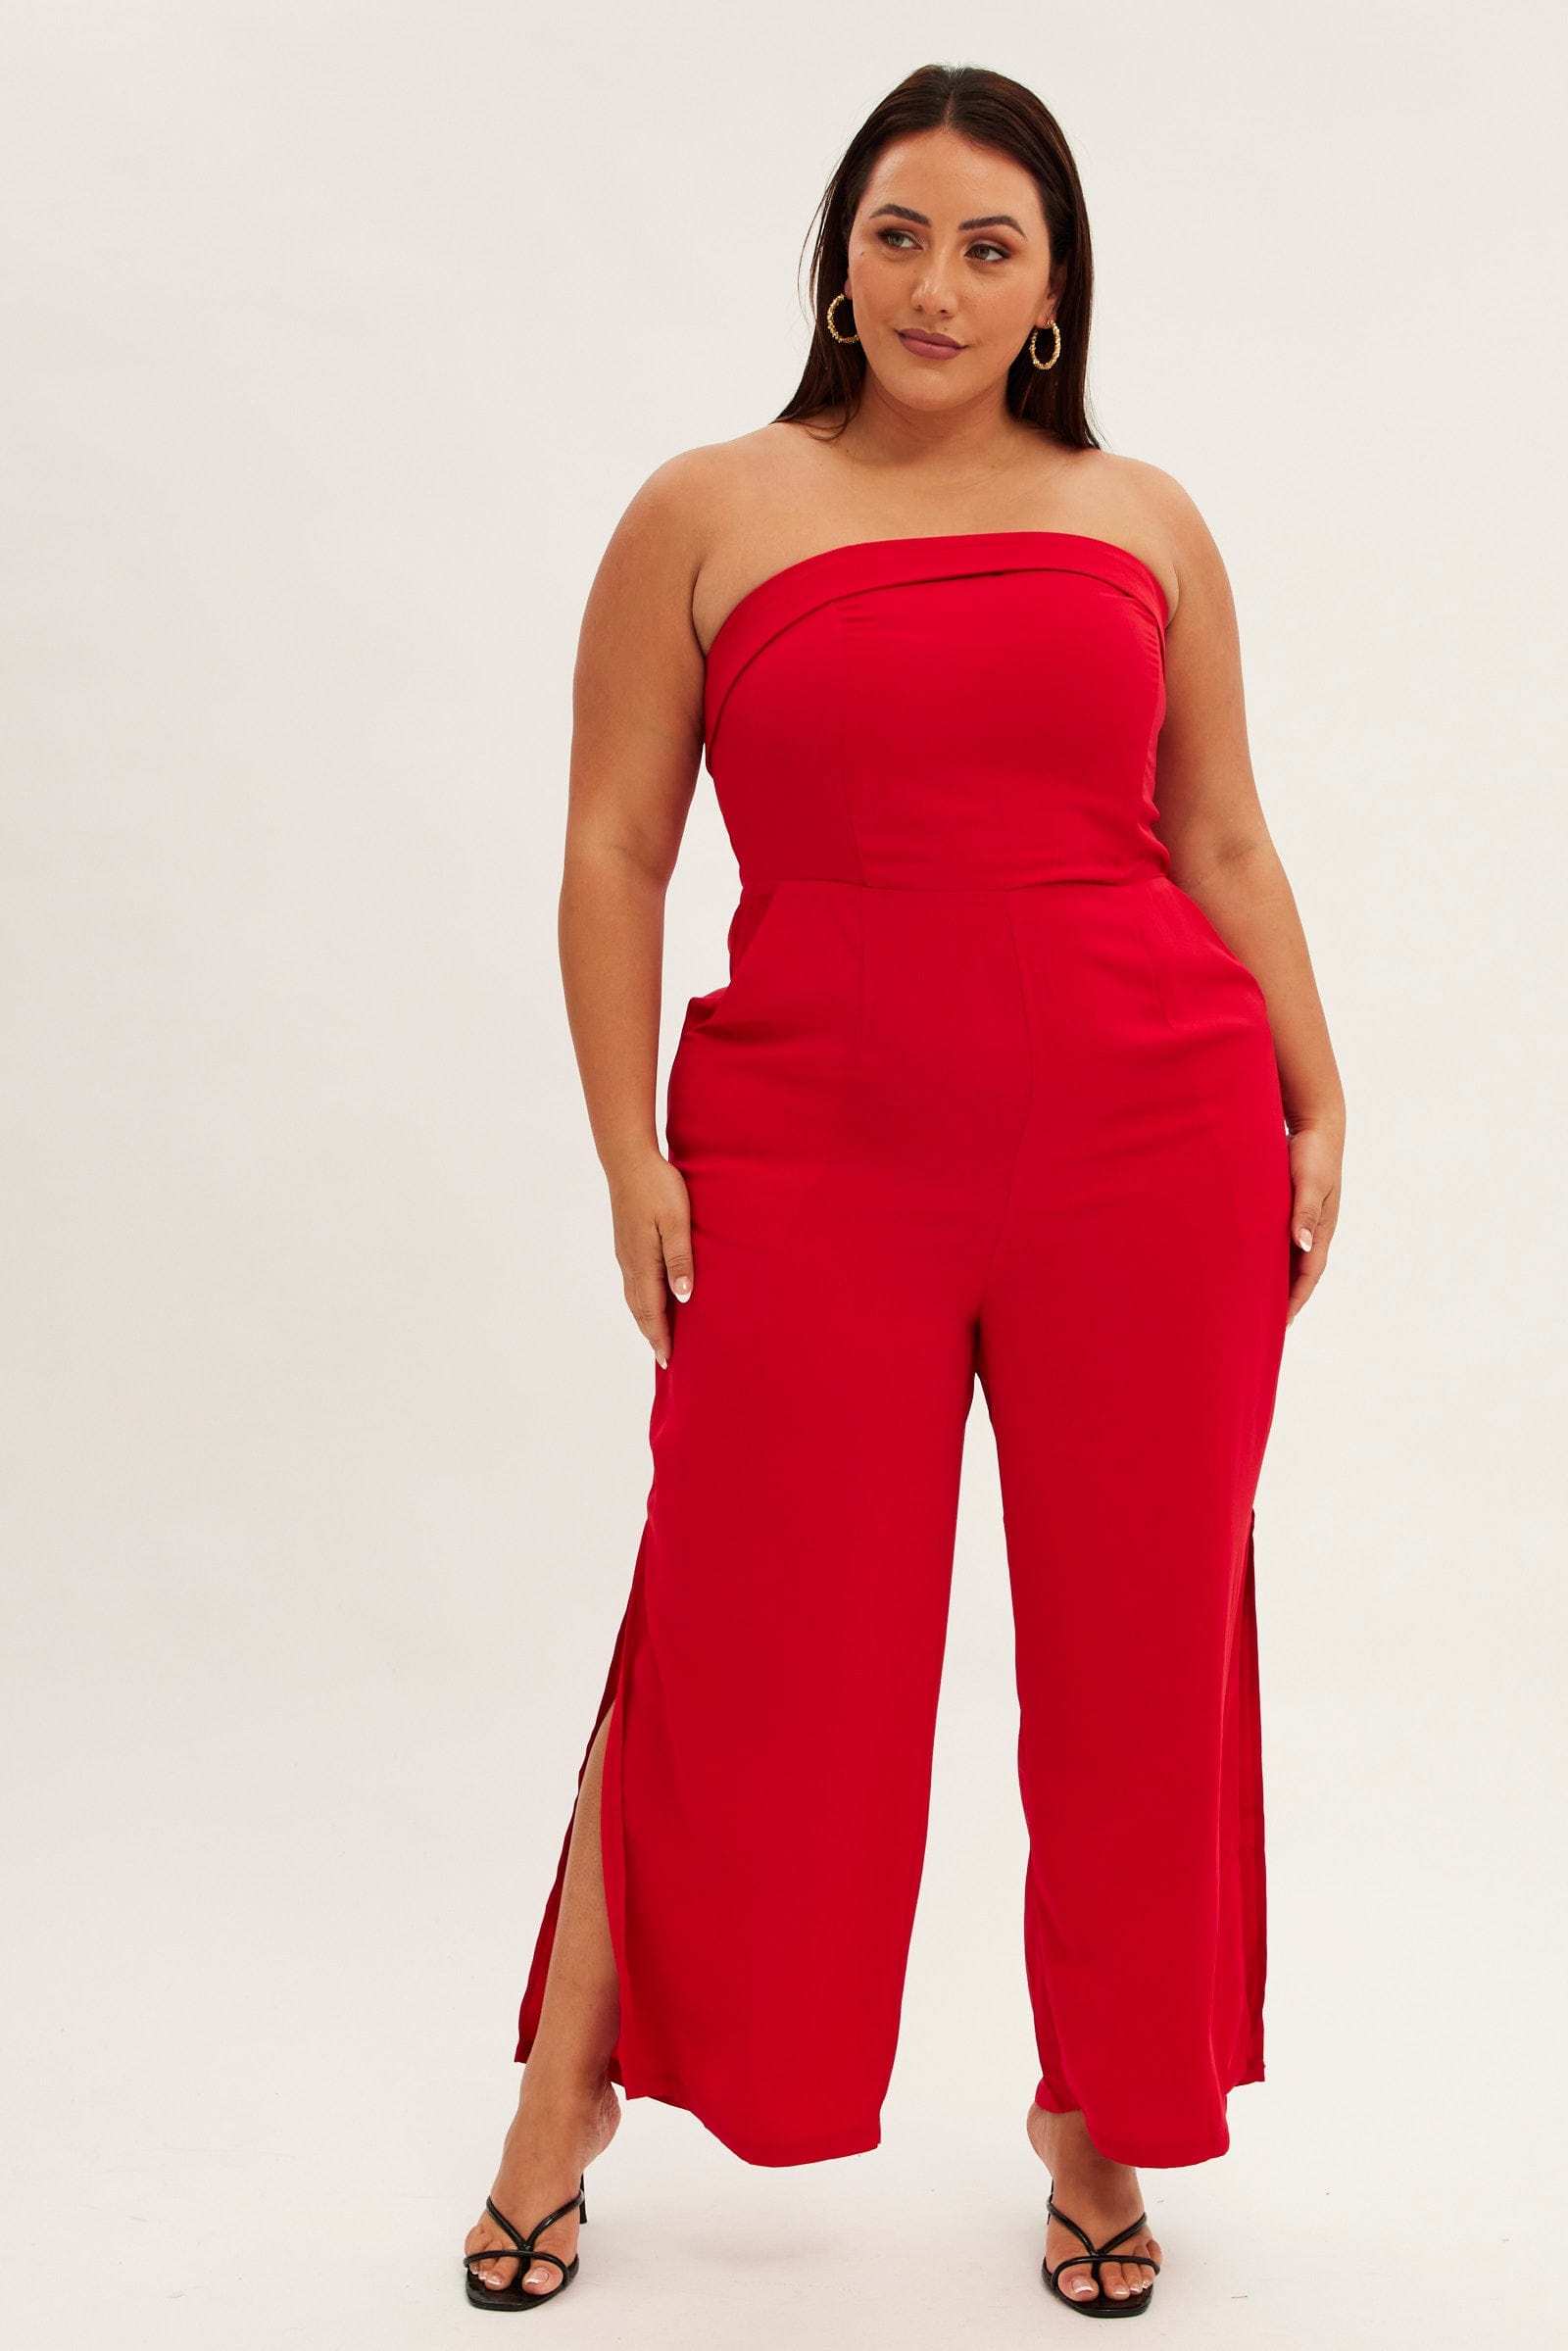 Red Strapless Jumpsuit Detachable Straps Split Leg for YouandAll Fashion